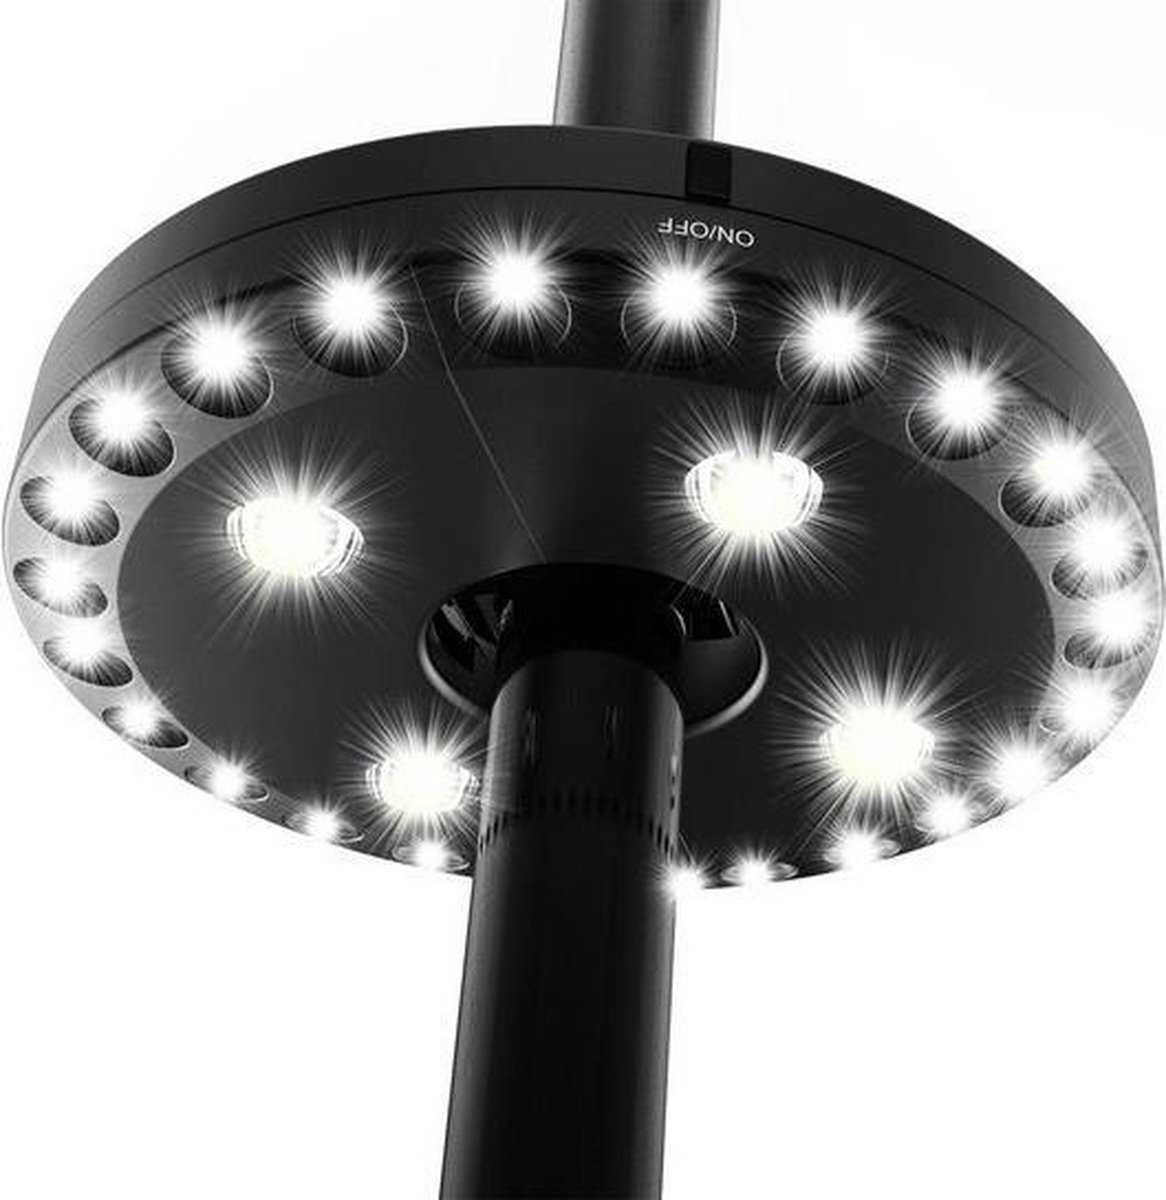 Nor-Tec parasolverlichting 3 functies LED - tuin - parasol - zomer - zon - verlichting - buiten. - Nor Tec